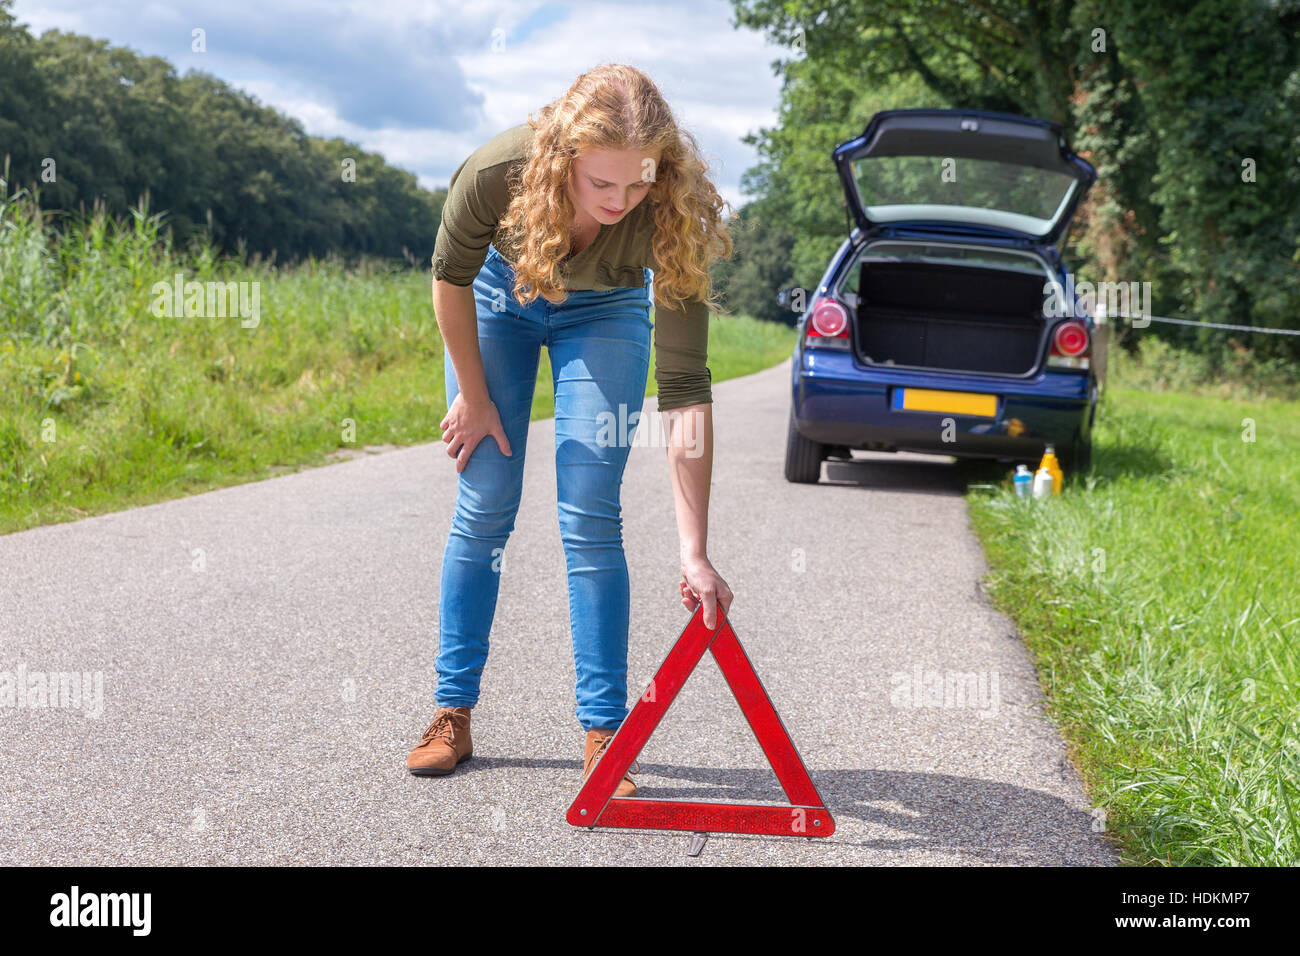 European teenage girl placing hazard warning triangle on country road Stock Photo